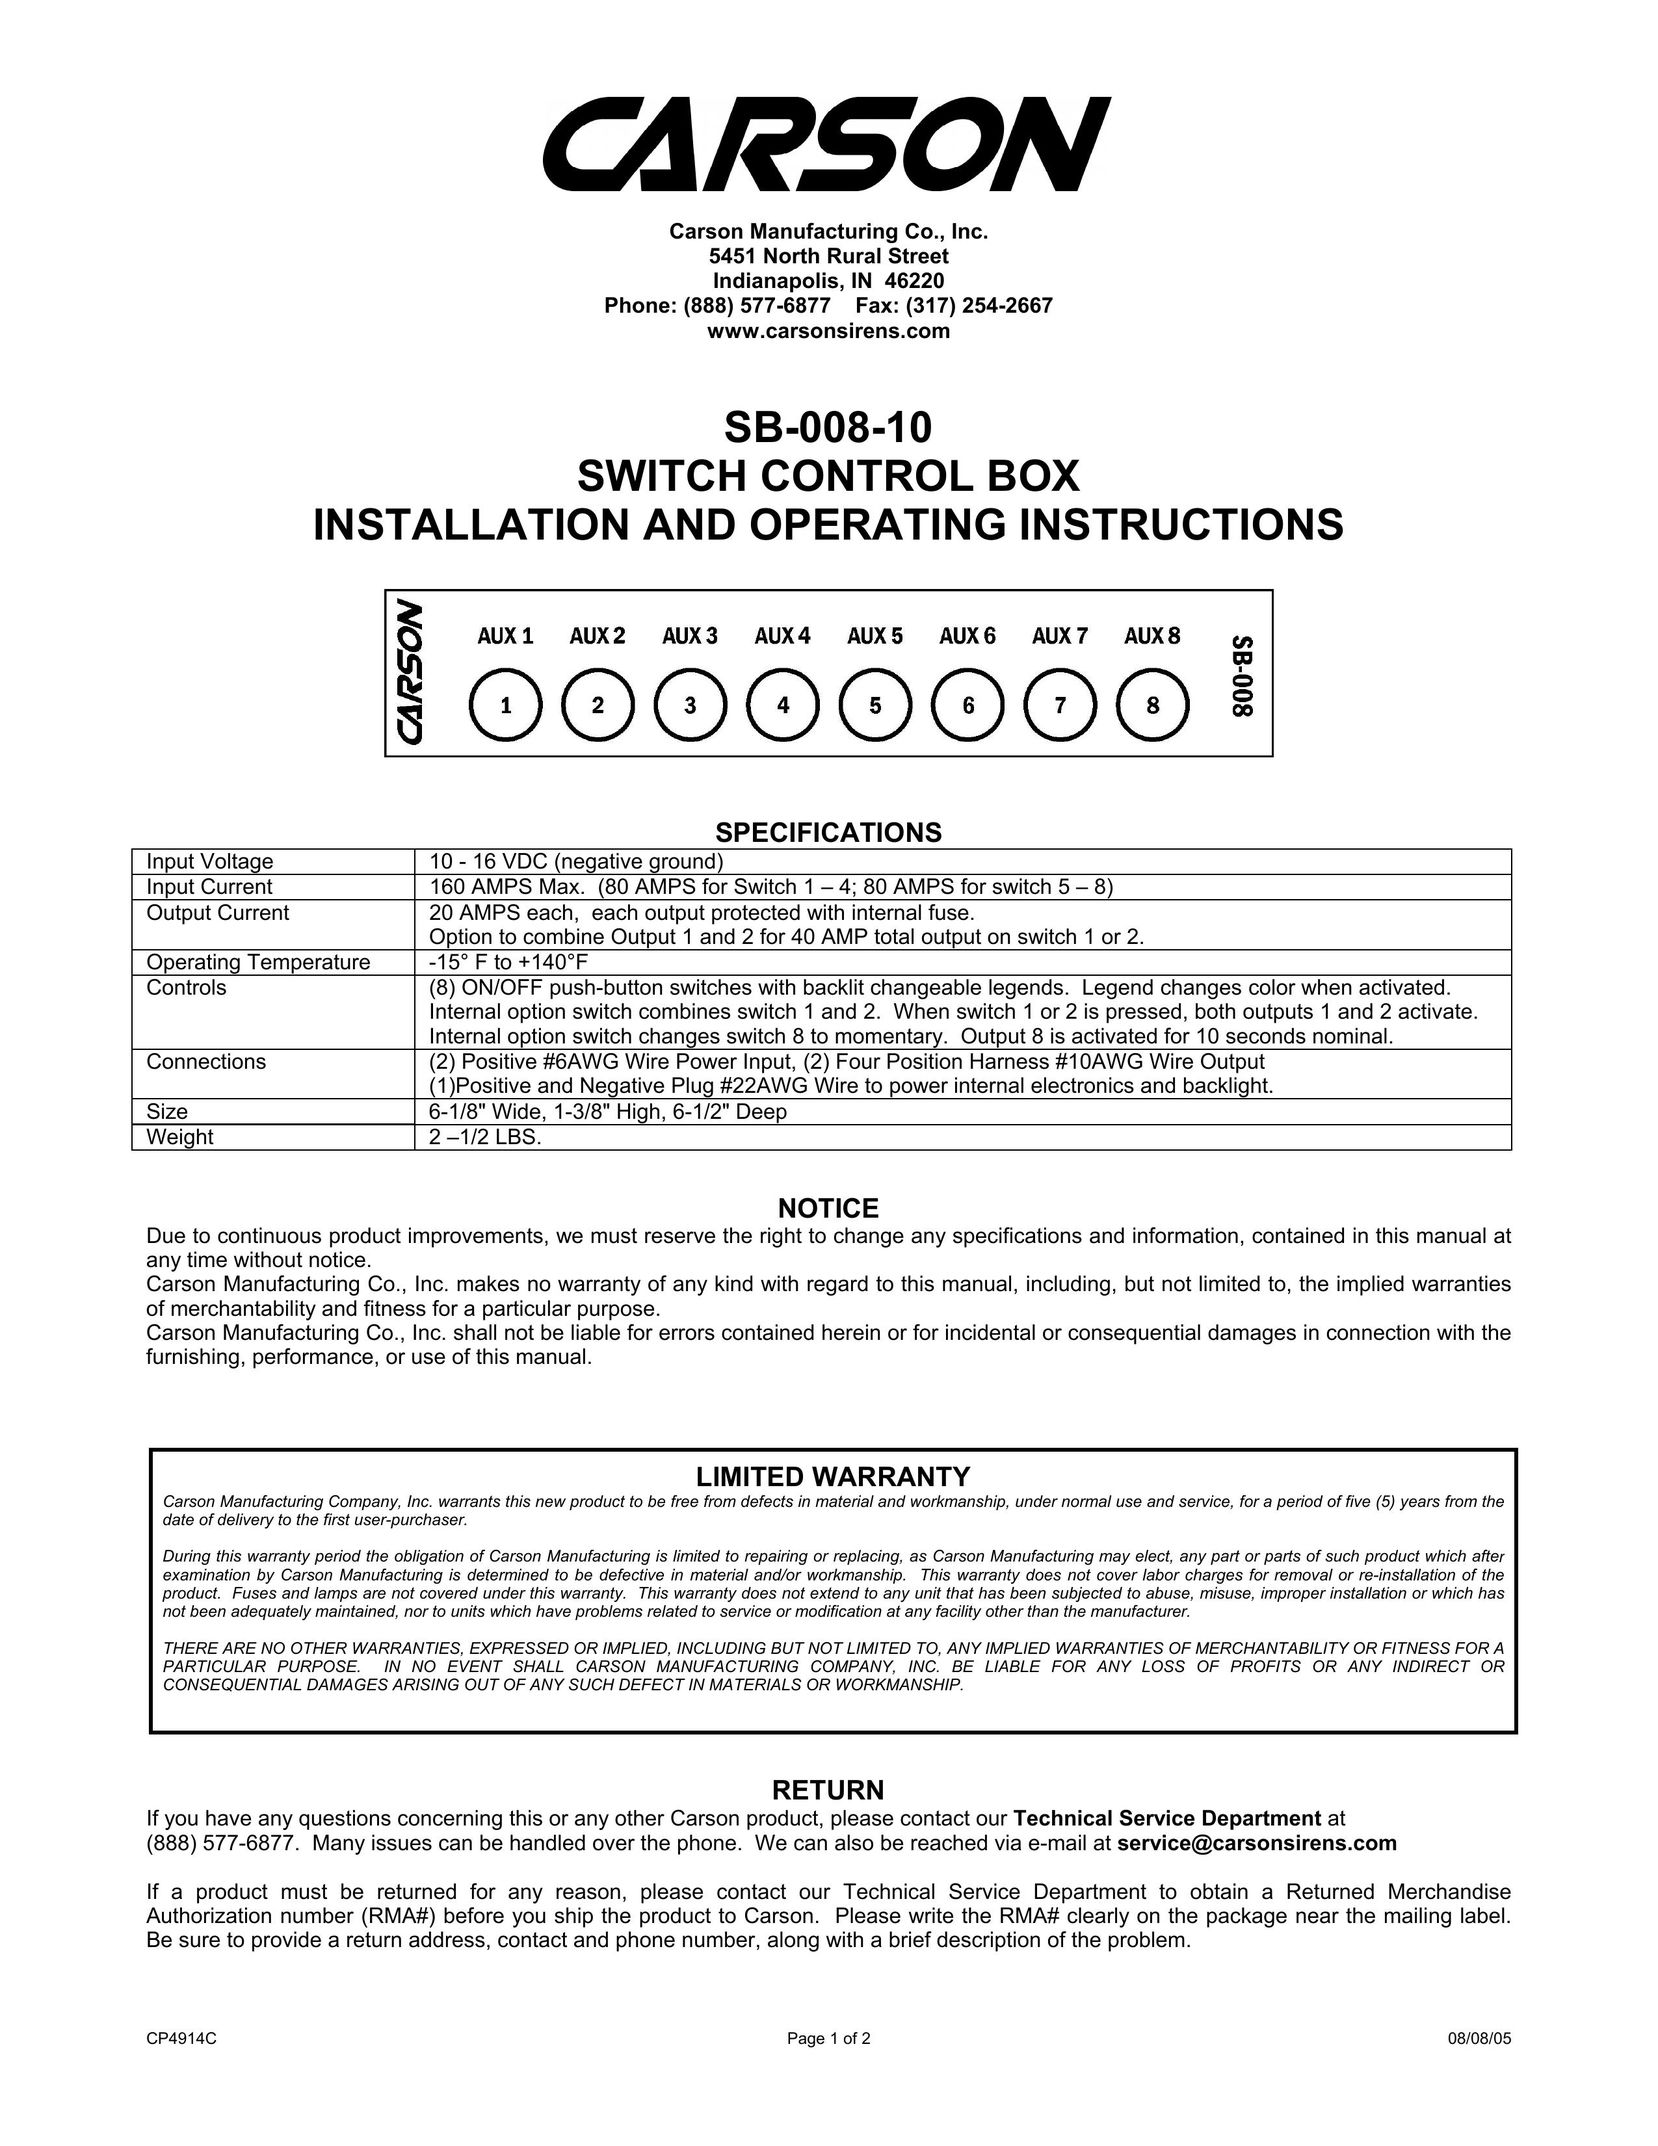 Carson SB-008-10 Switch User Manual